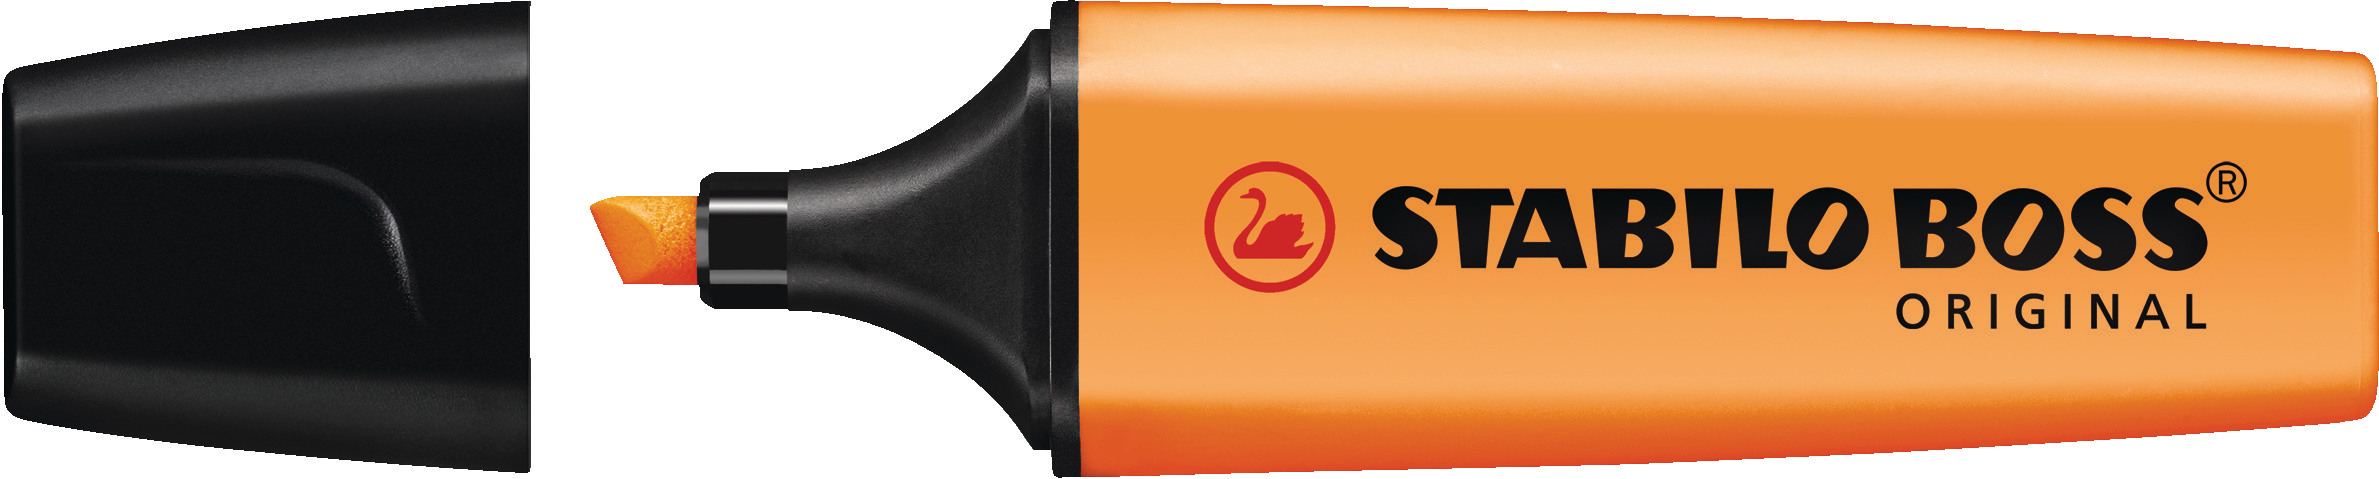 STABILO Boss Leuchtmarker Original 70/54 orange 2-5mm